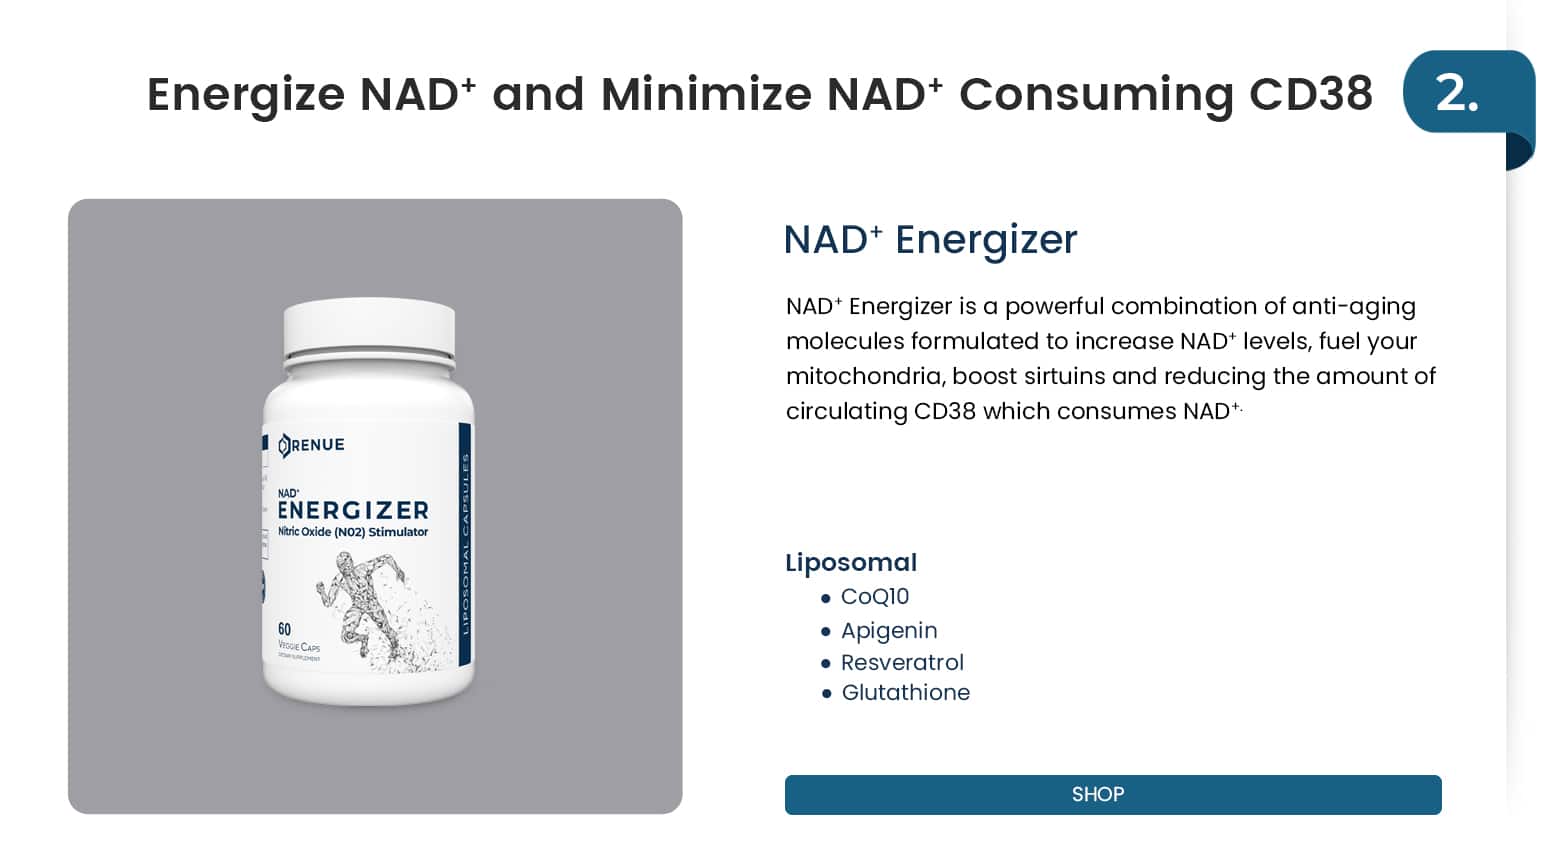 NAD Energizer